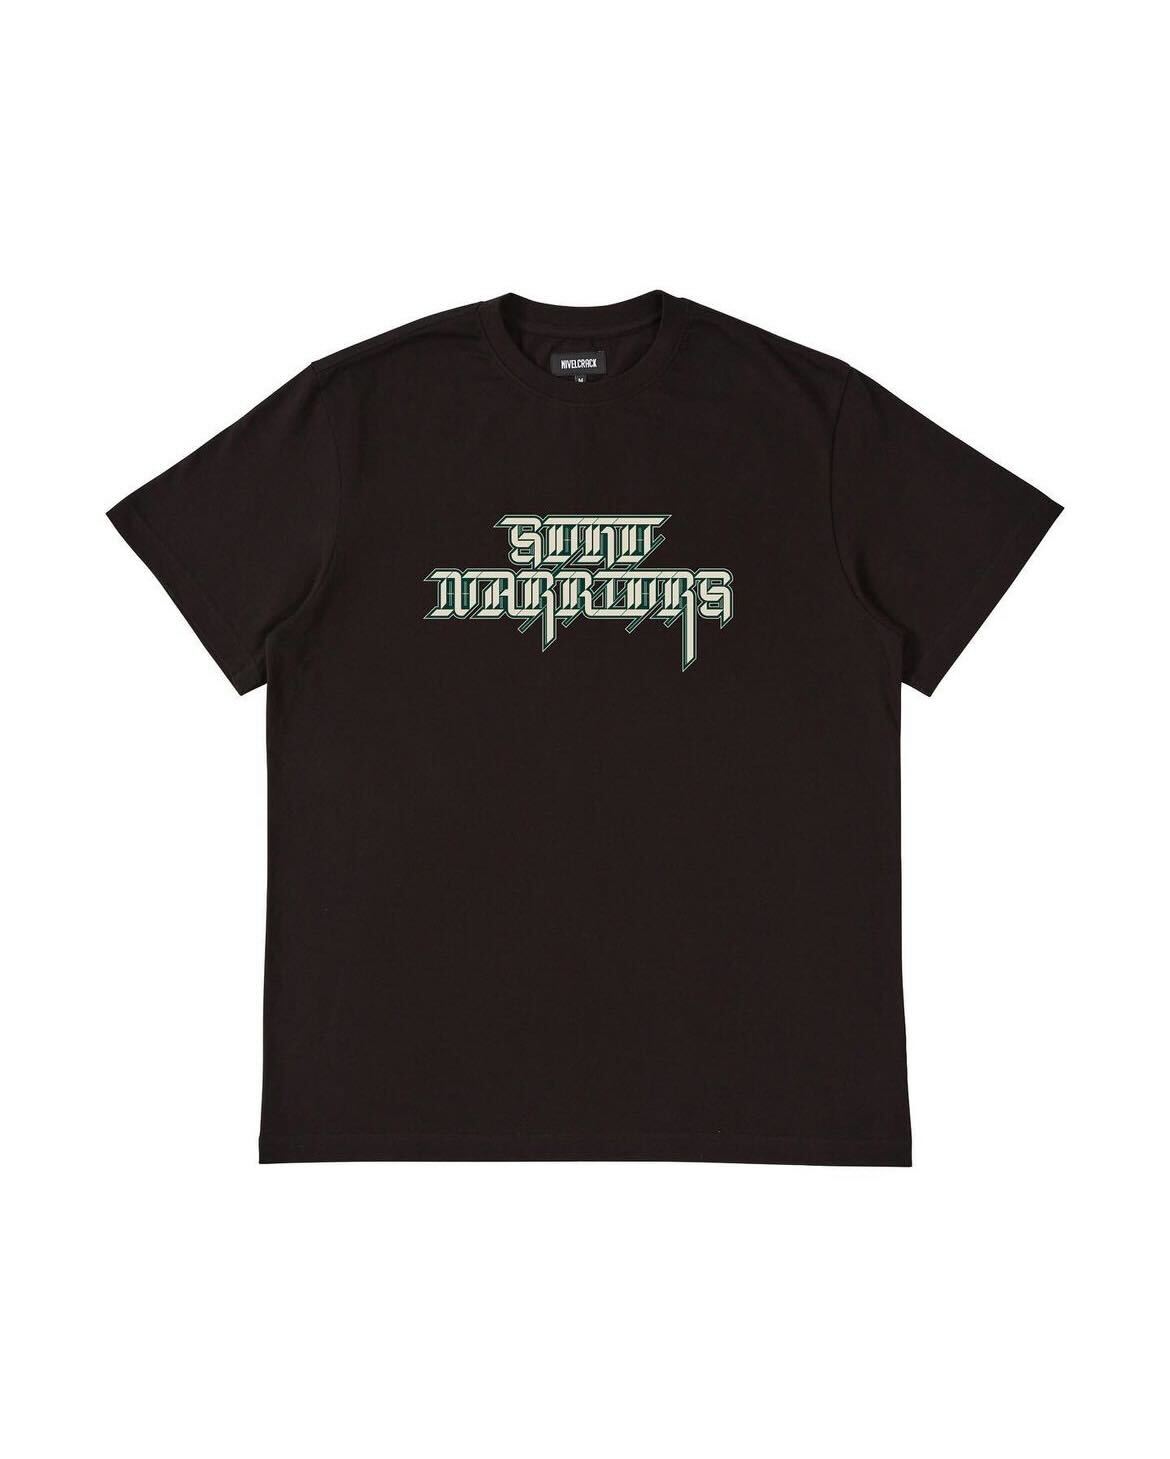 Soho Warriors X Nivelcrack (Graphic T-Shirt)